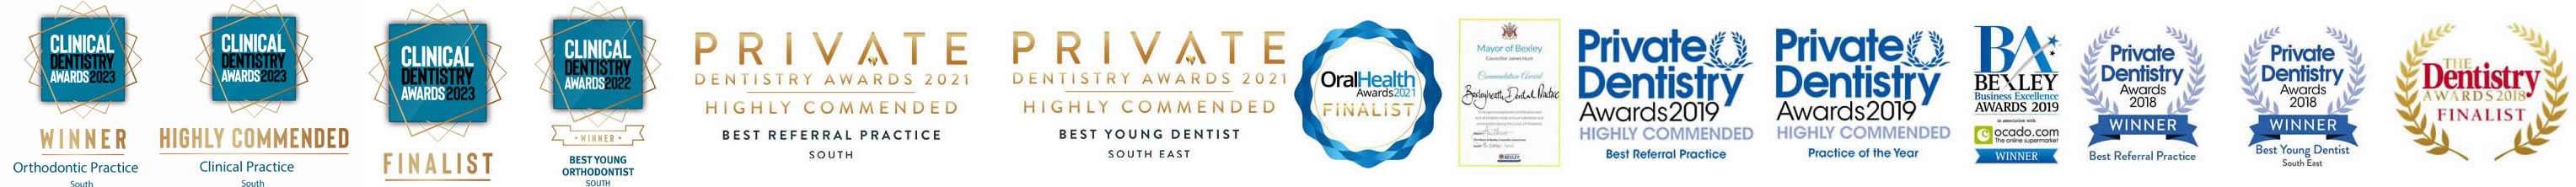 The Sandford Bexleyheath finalist in Dental Awards